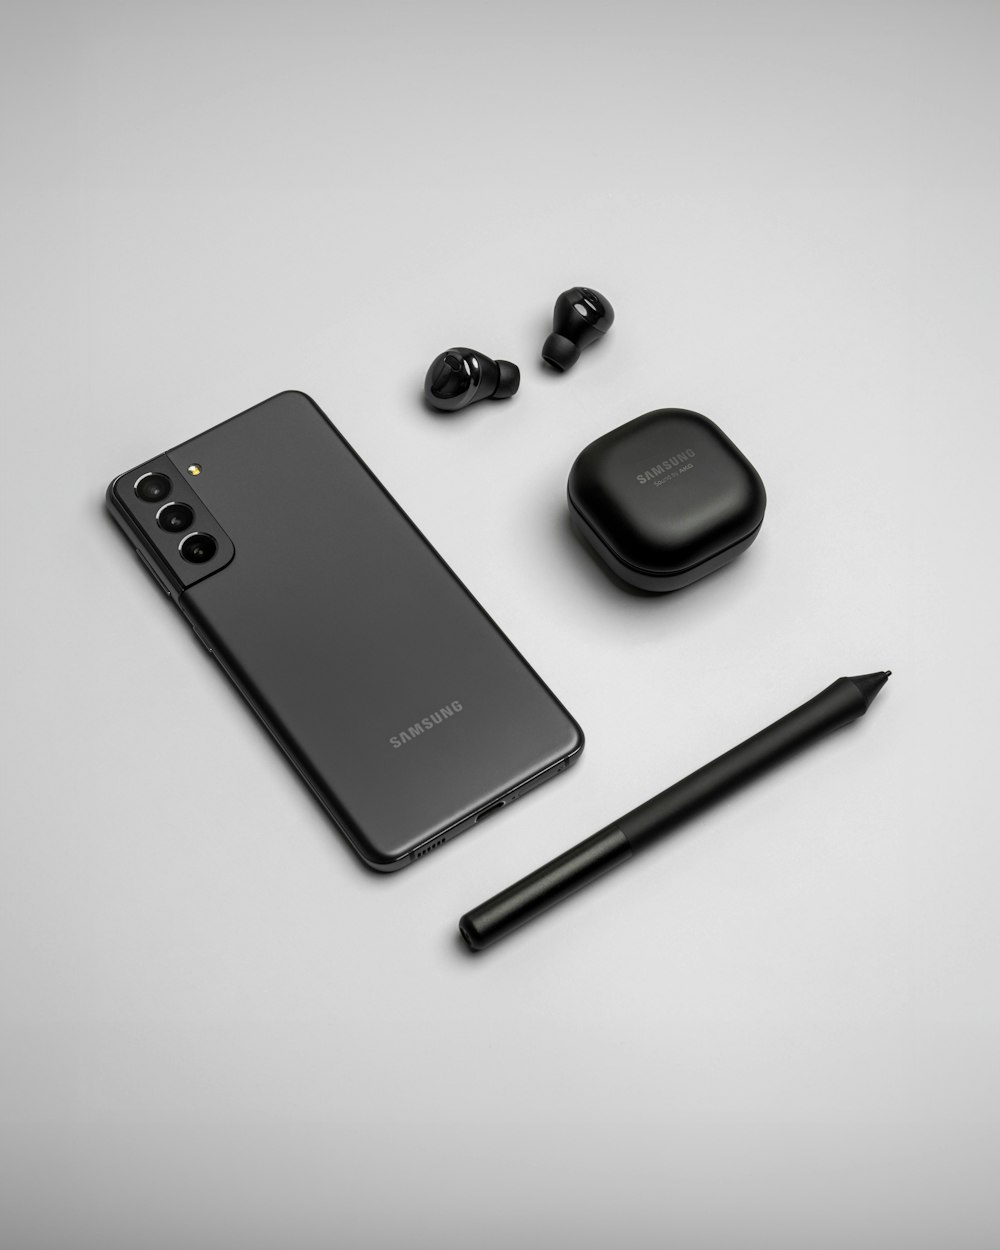 a black samsung phone, ear buds, and a black pen